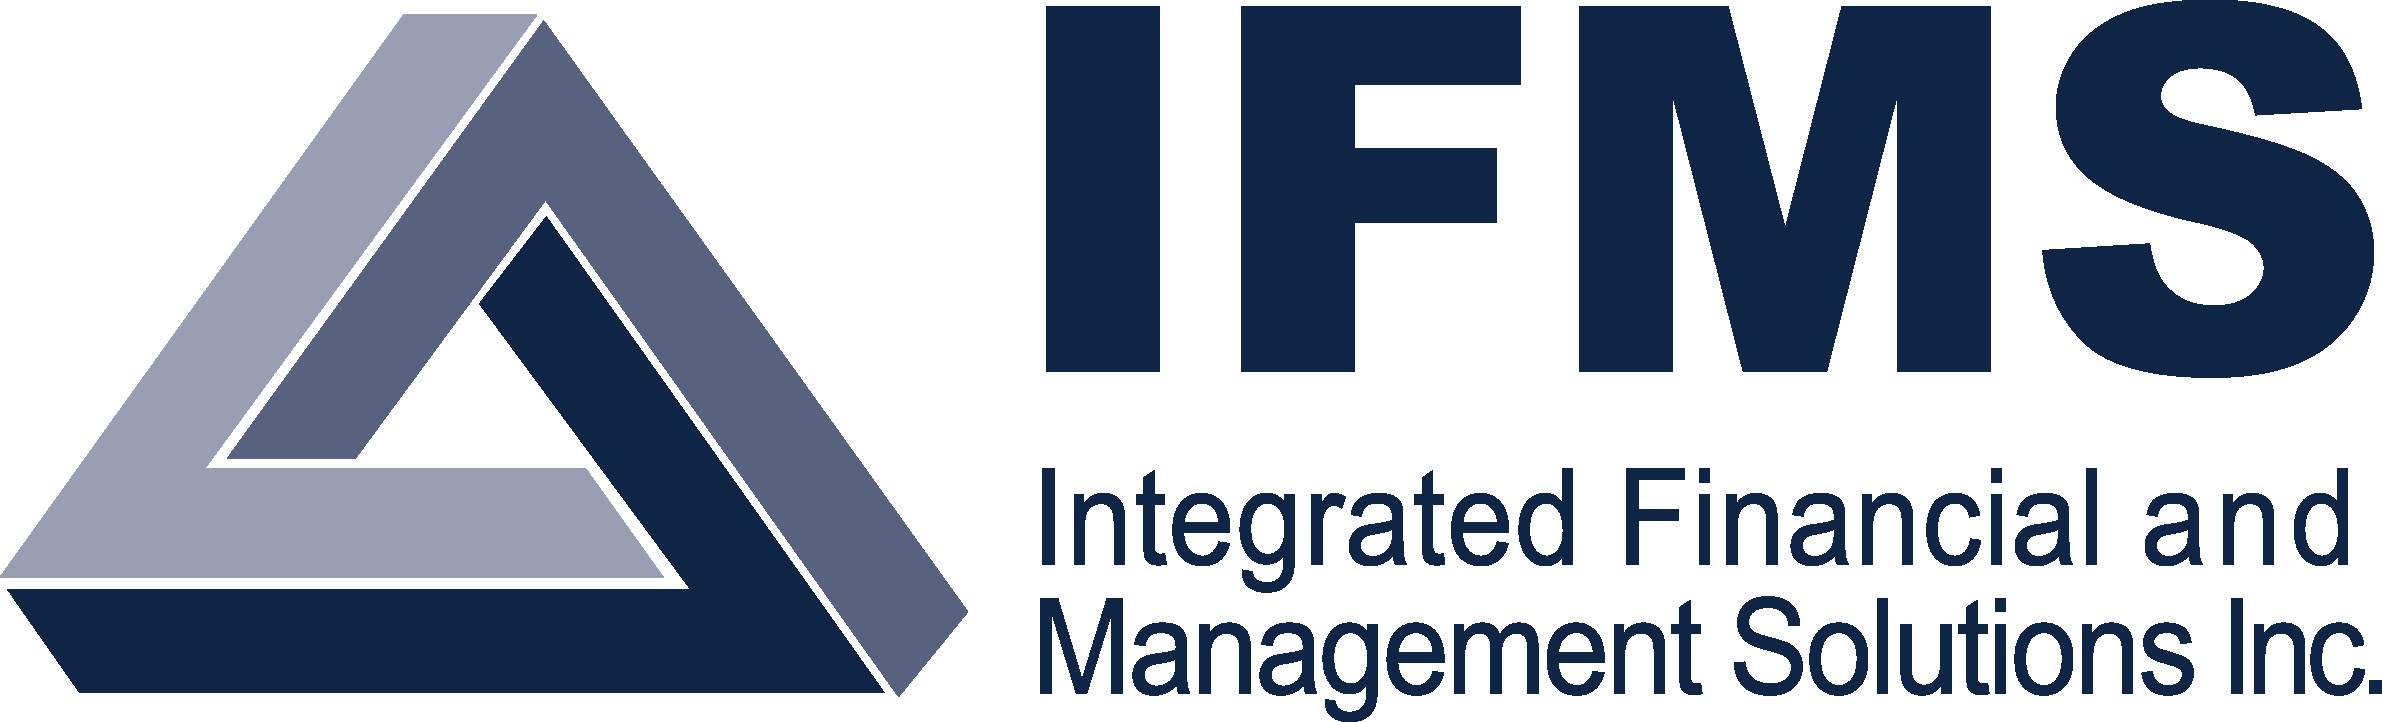 IFMS-Logo-HR